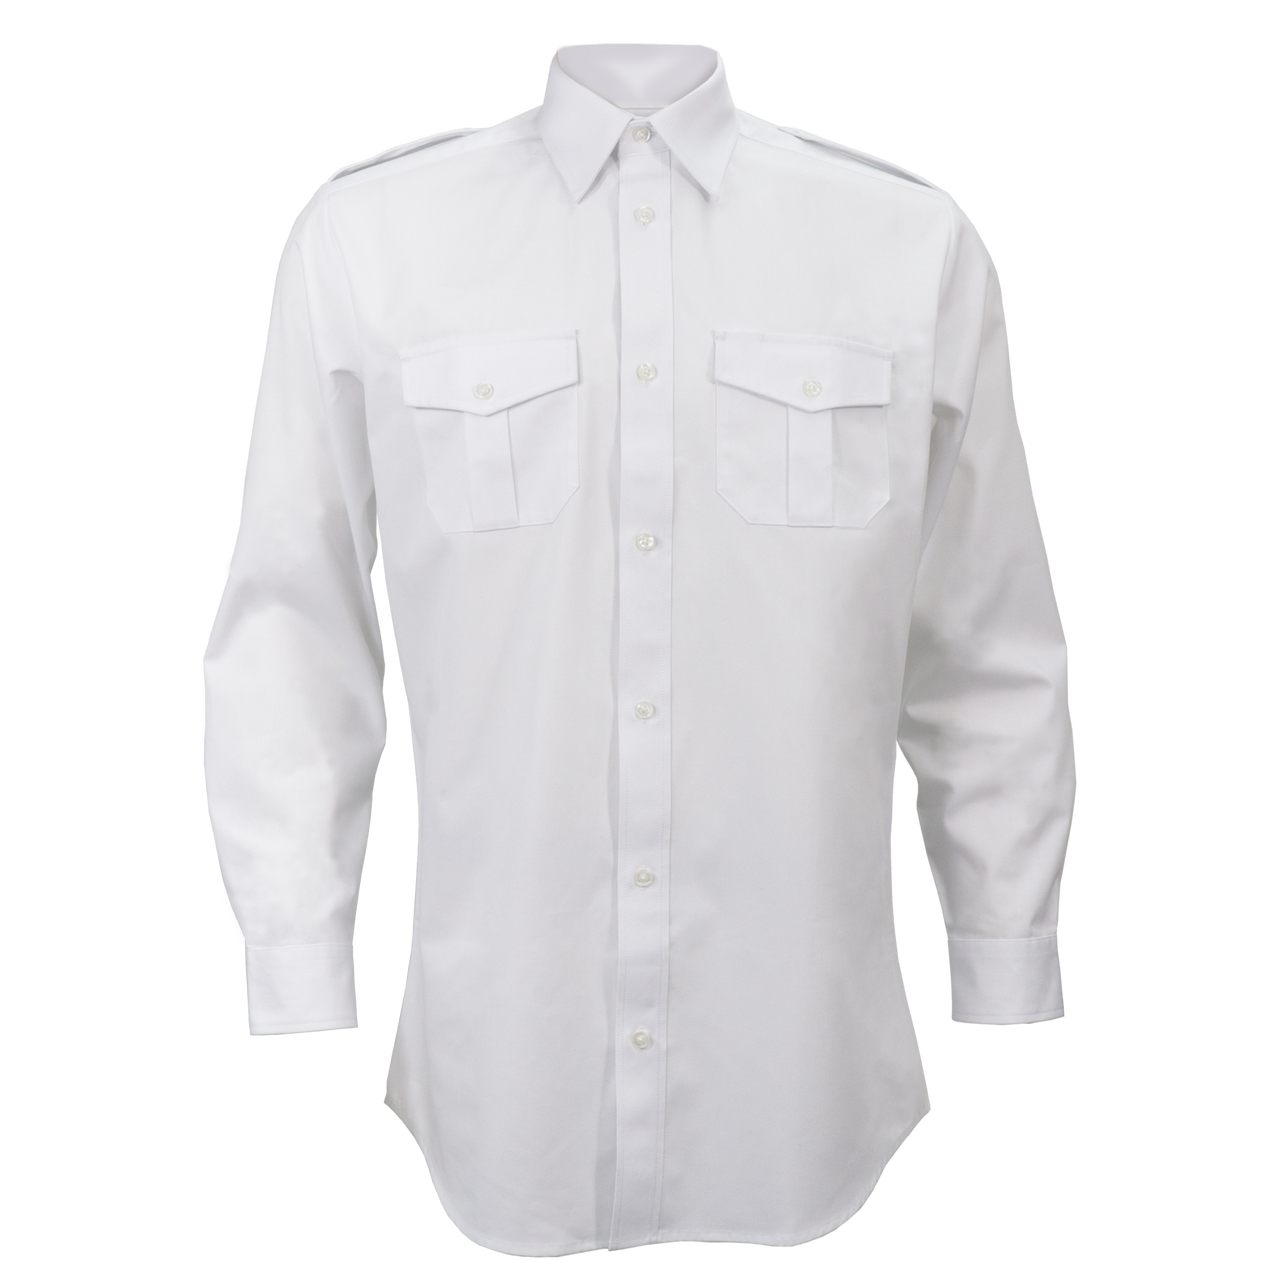 627 - Chemise militaire à manches longues ||627 - Military Long sleeve shirt